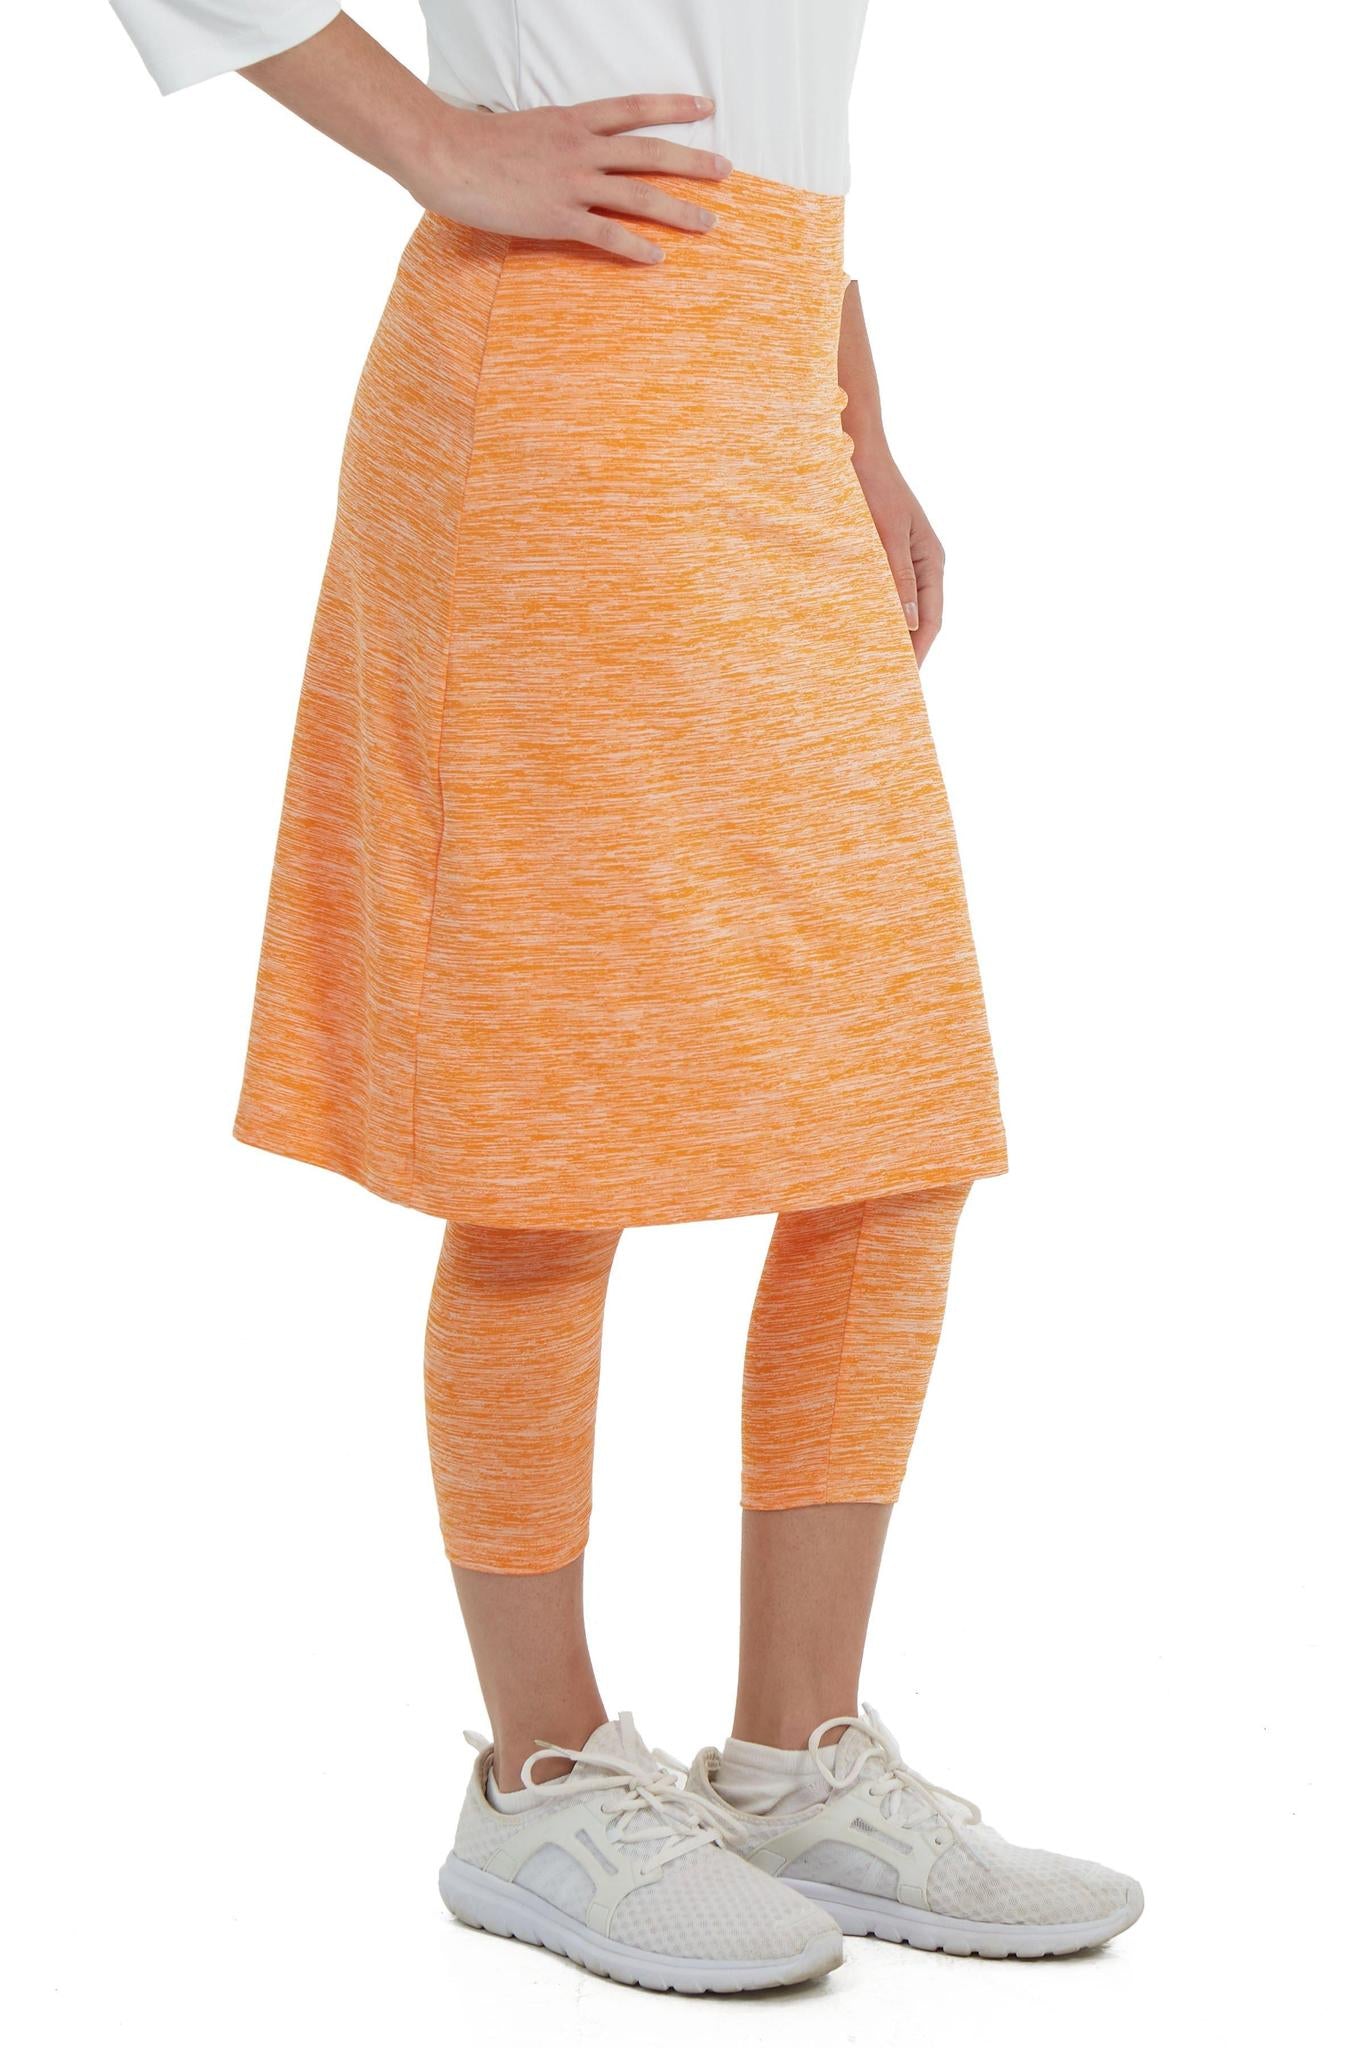 SpaceDye Snoga Athletic Skirt in Orange Slush